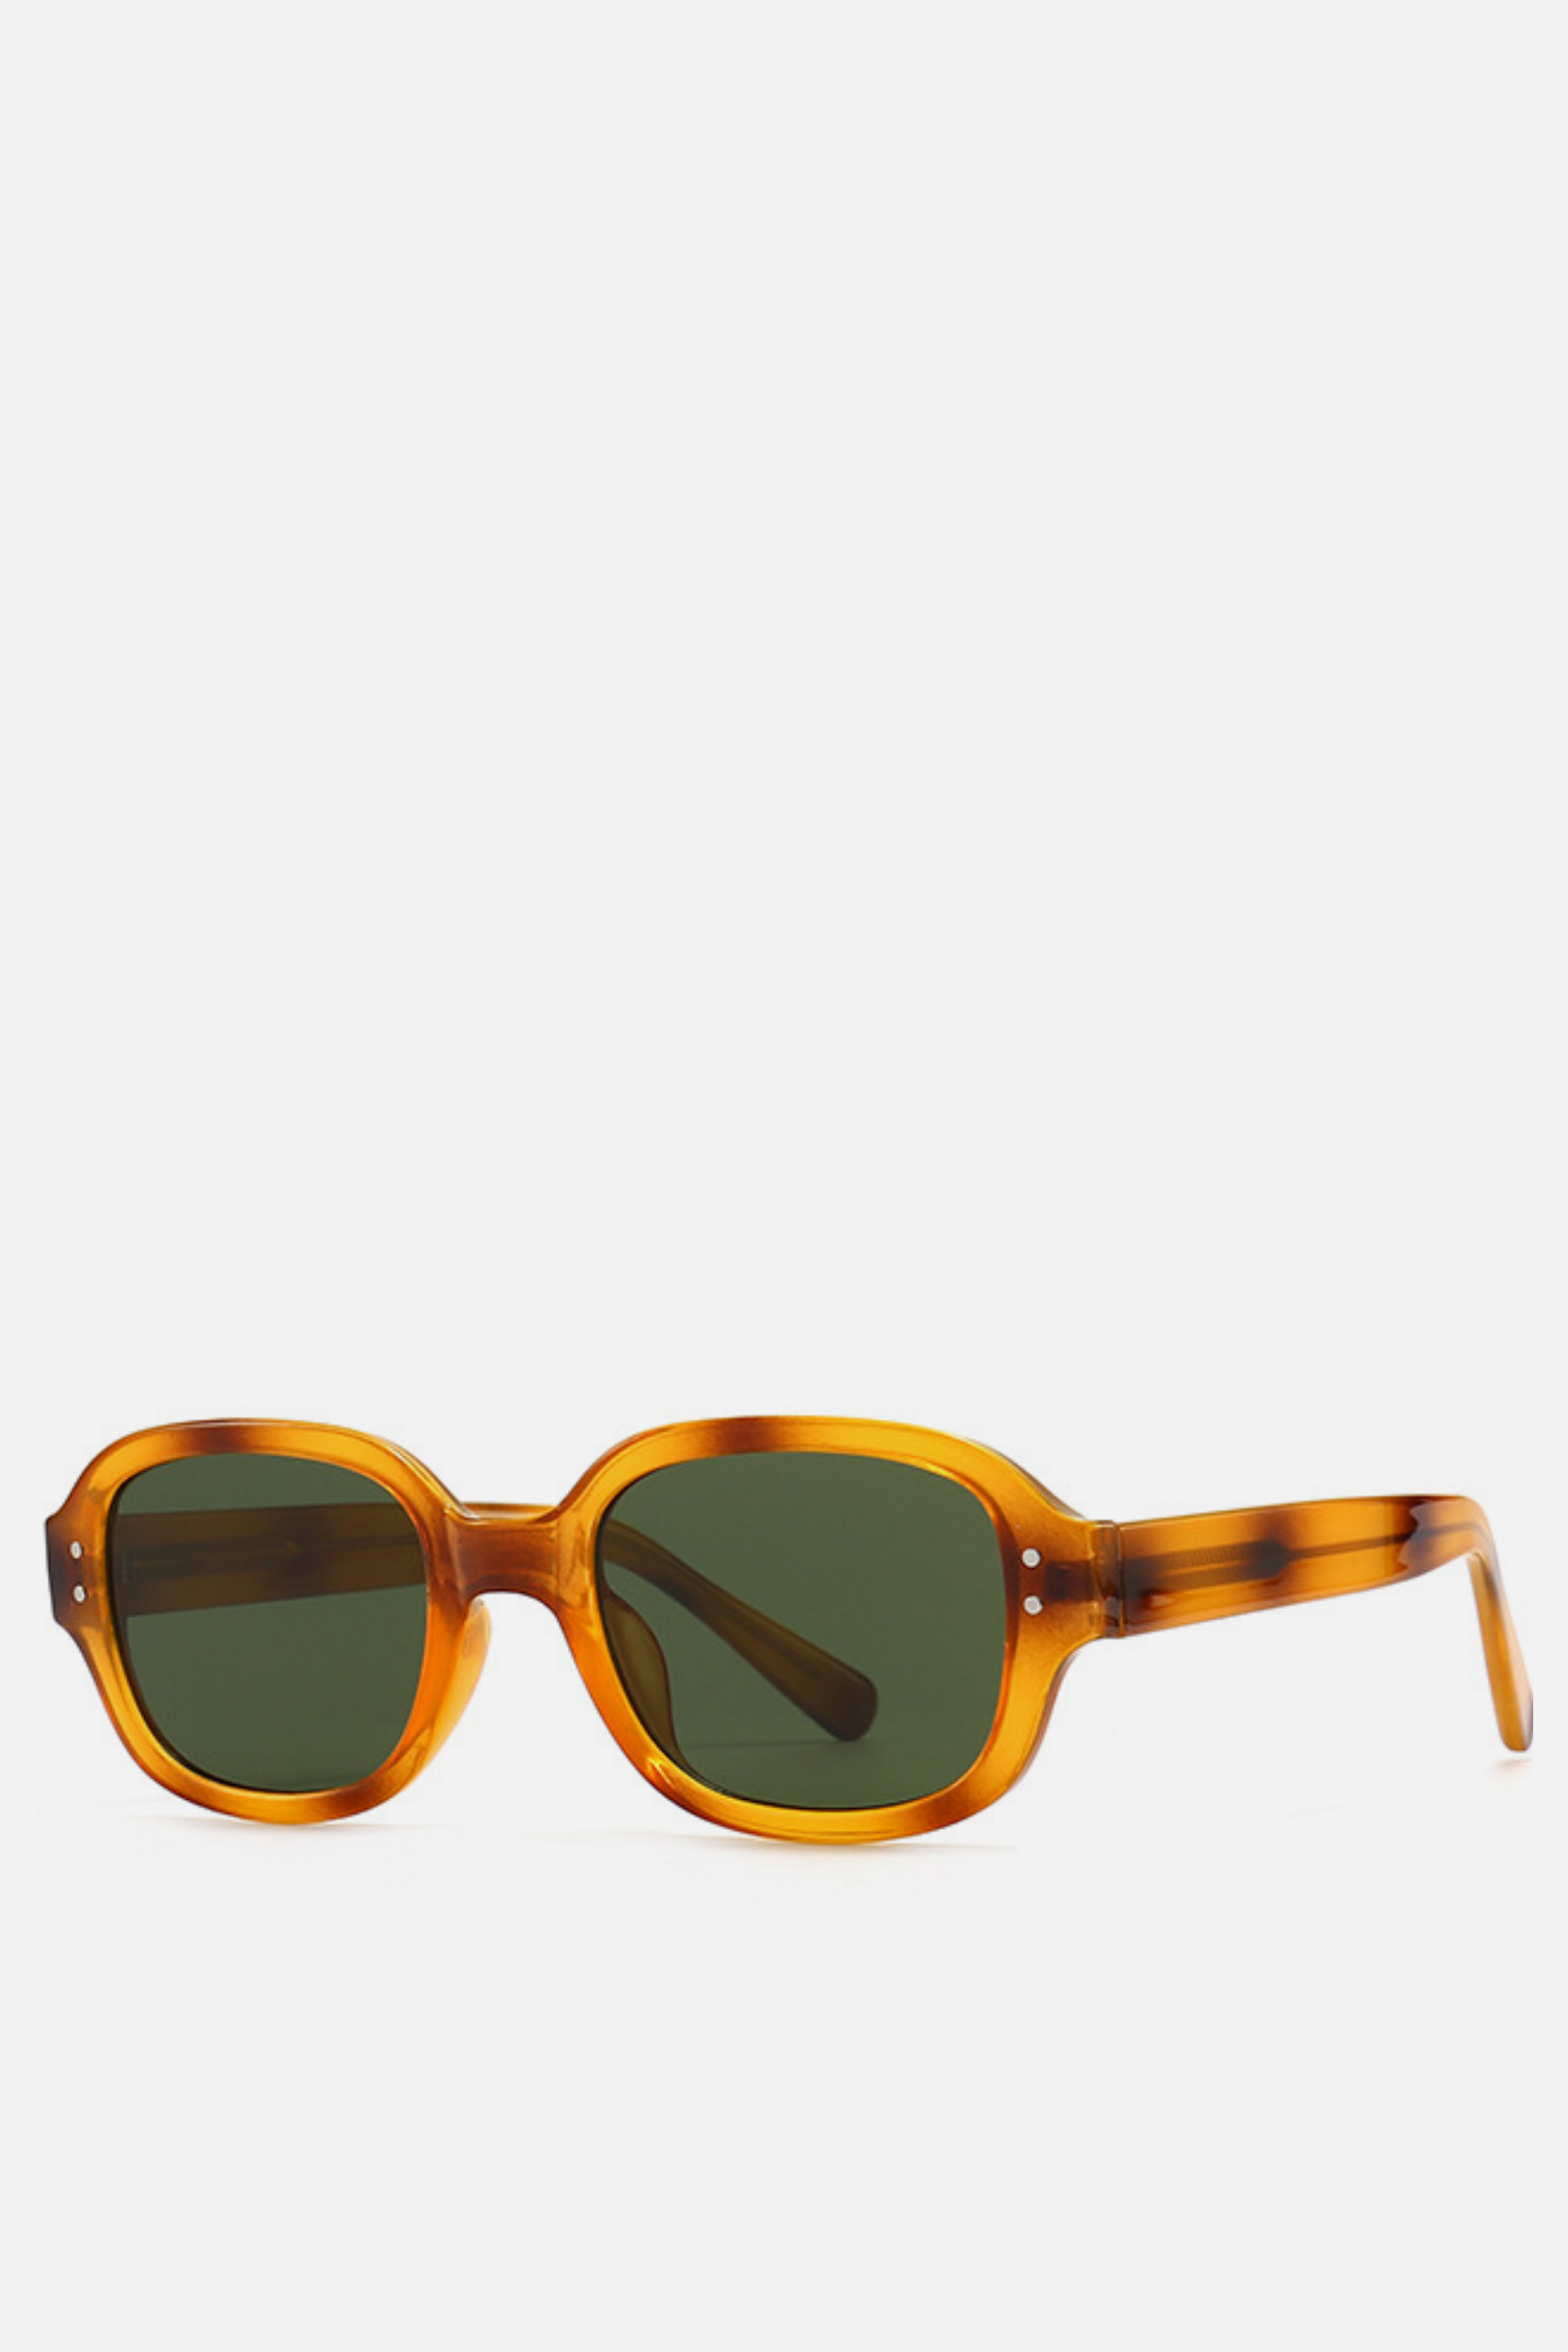 SICILY Tortoise Rounded Sunglasses